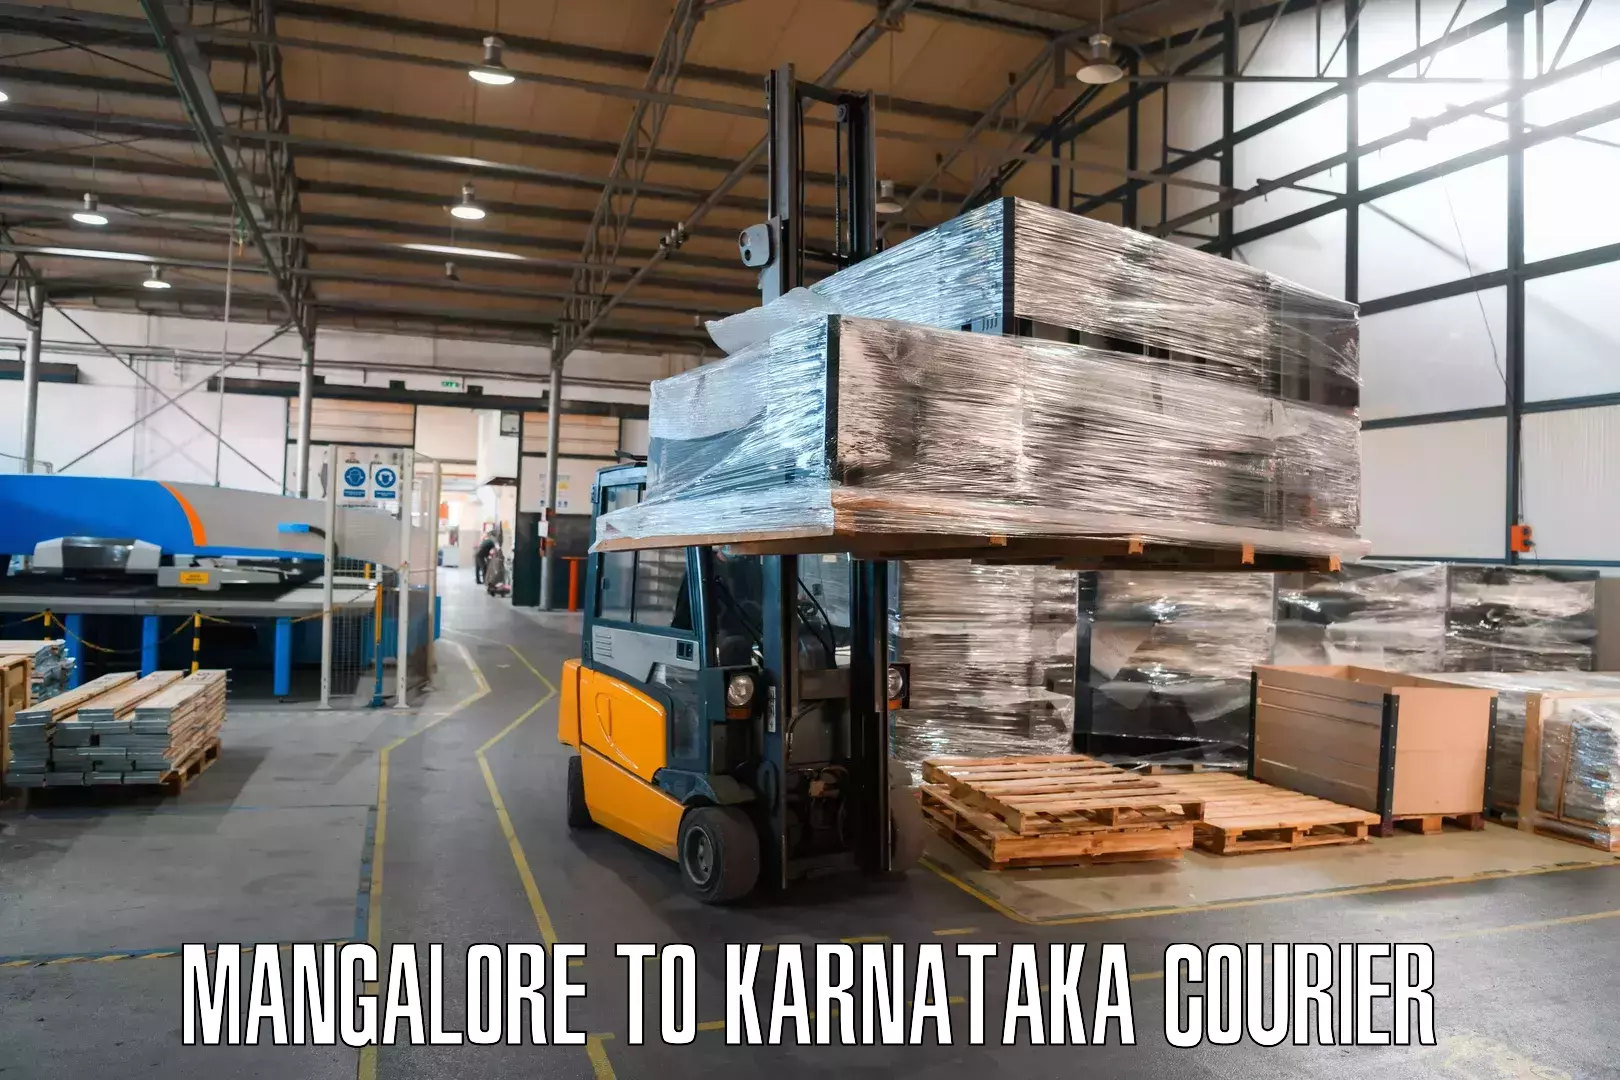 Flexible delivery schedules Mangalore to Karnataka